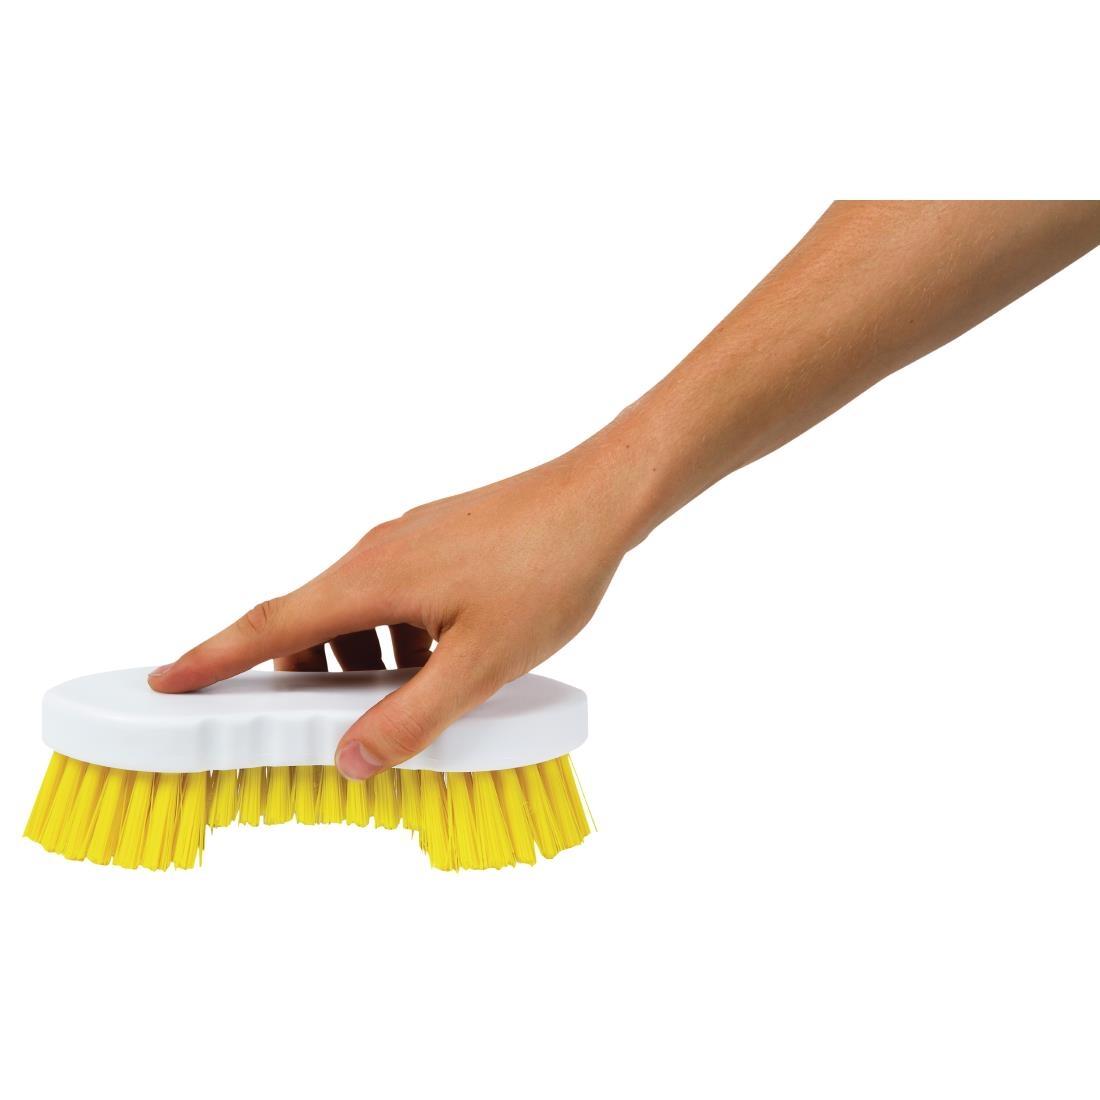 Jantex Scrub Brush Yellow - L723  - 3